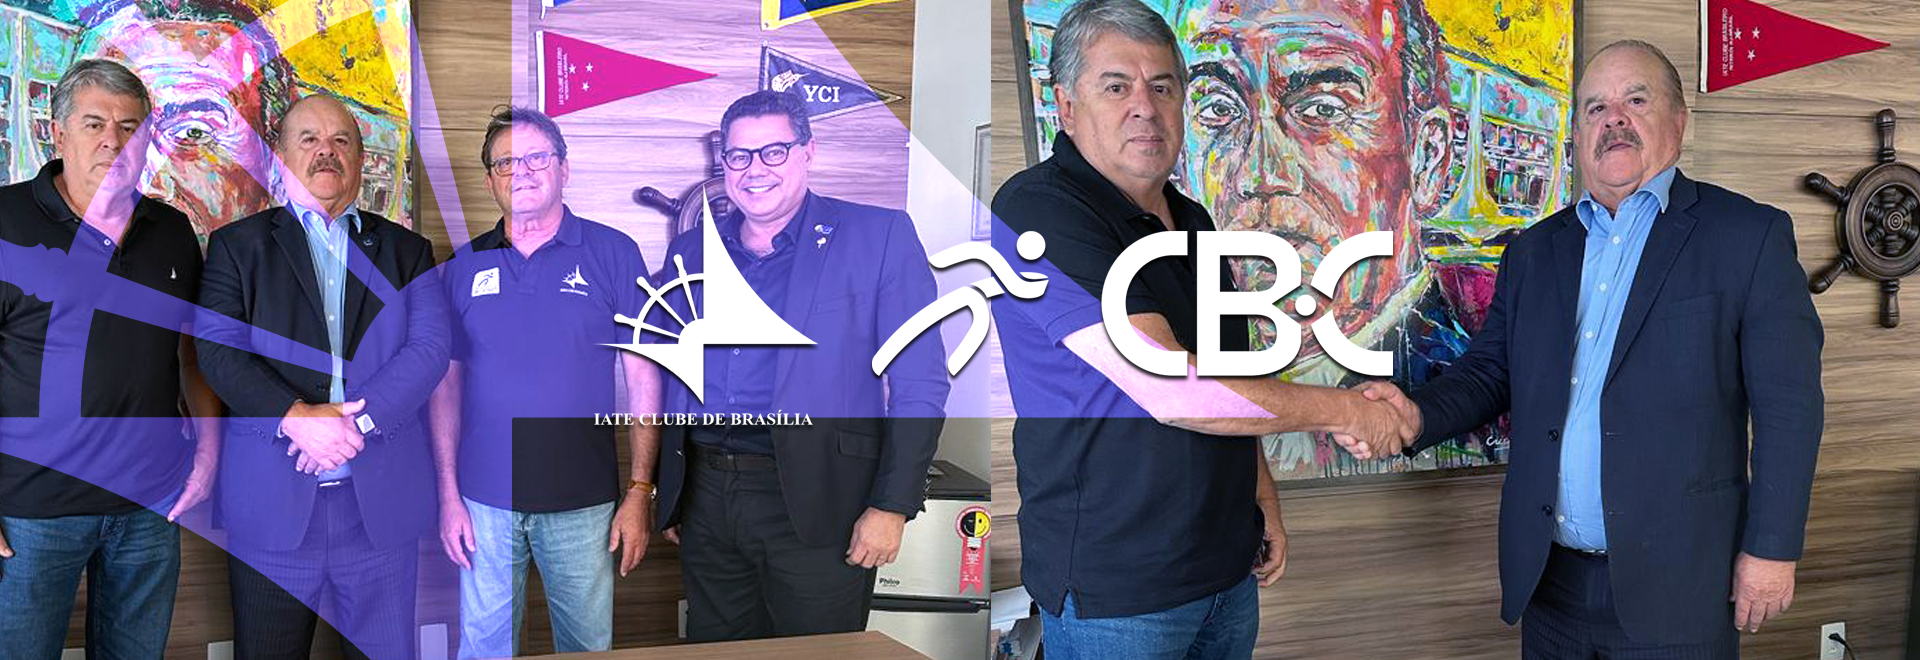 Presidente do CBC visita o Iate Clube de Brasília  